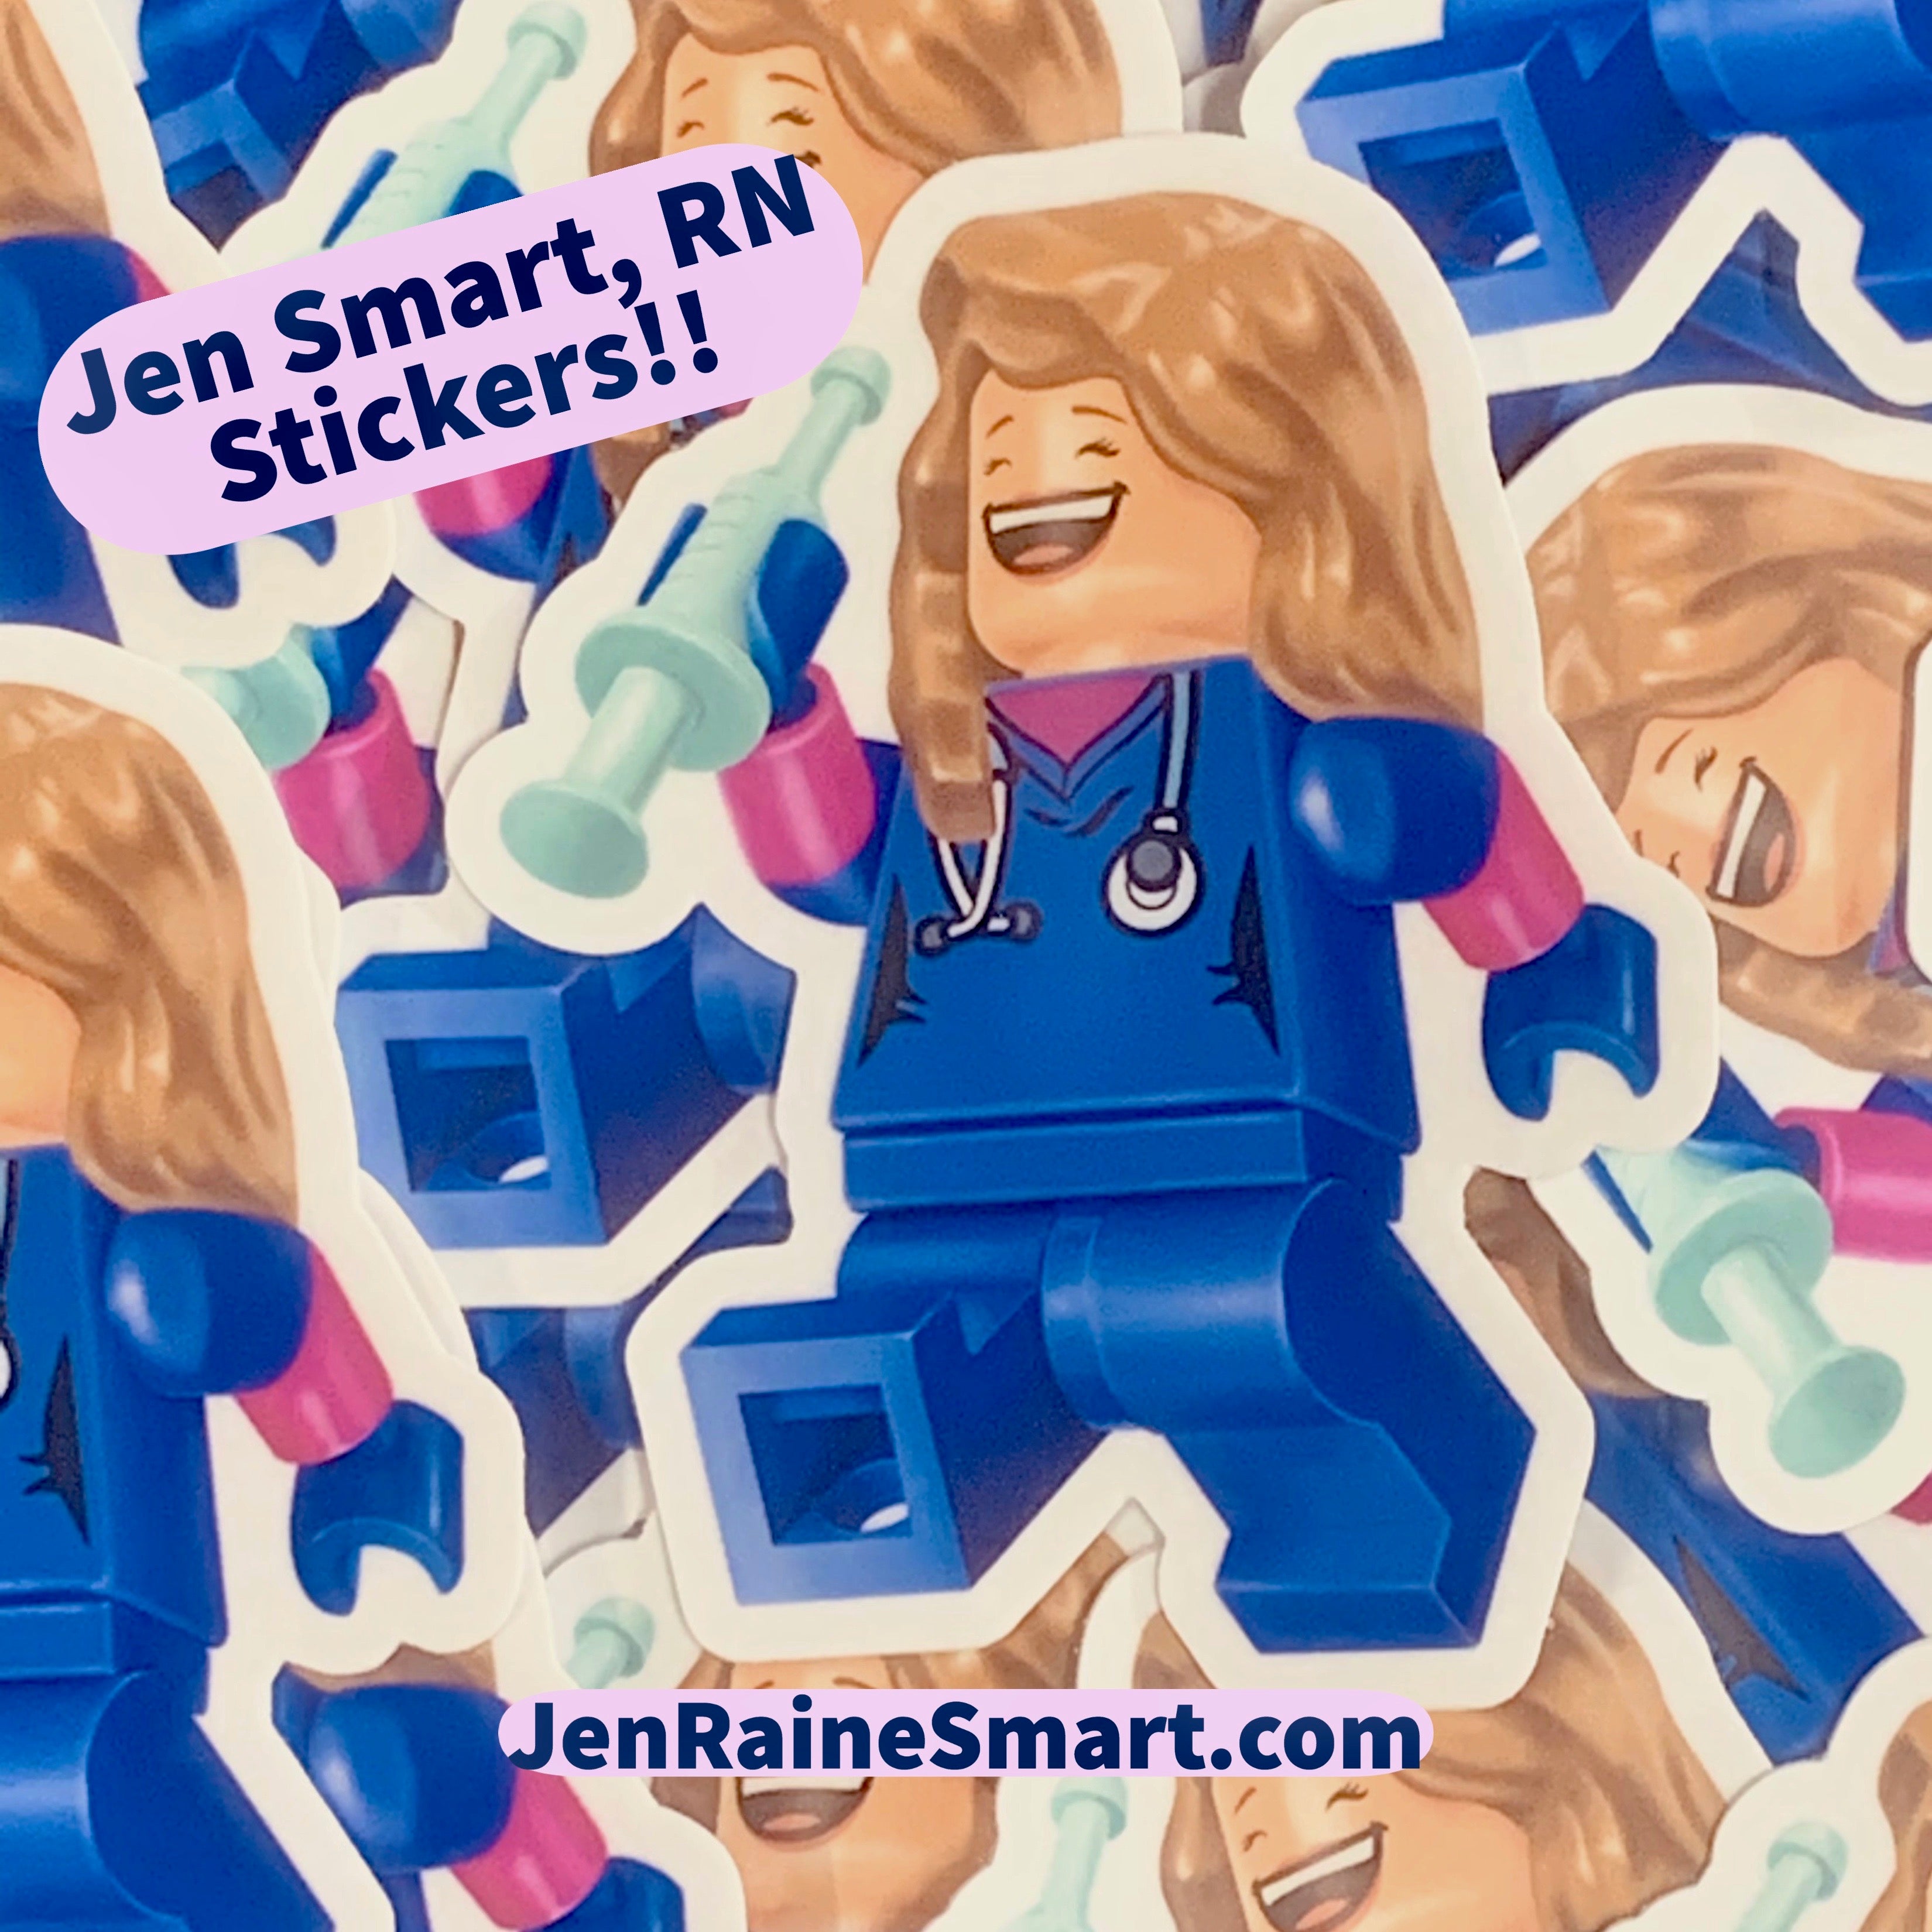 Jen Smart, RN Minifig Sticker *Free Shipping!*